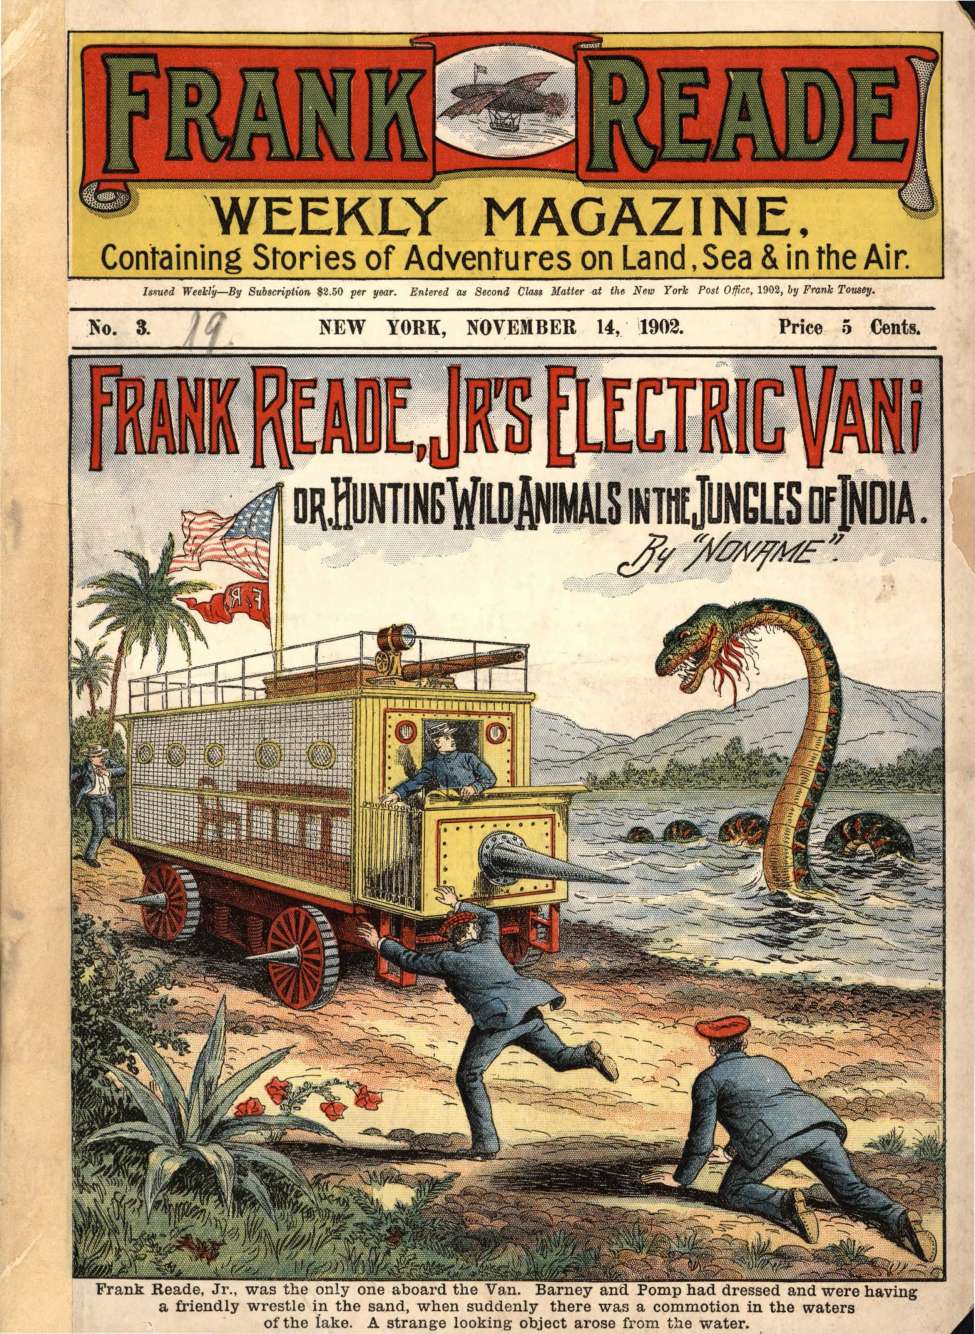 Book Cover For v1 3 - Frank Reade, Jr's Electric Van